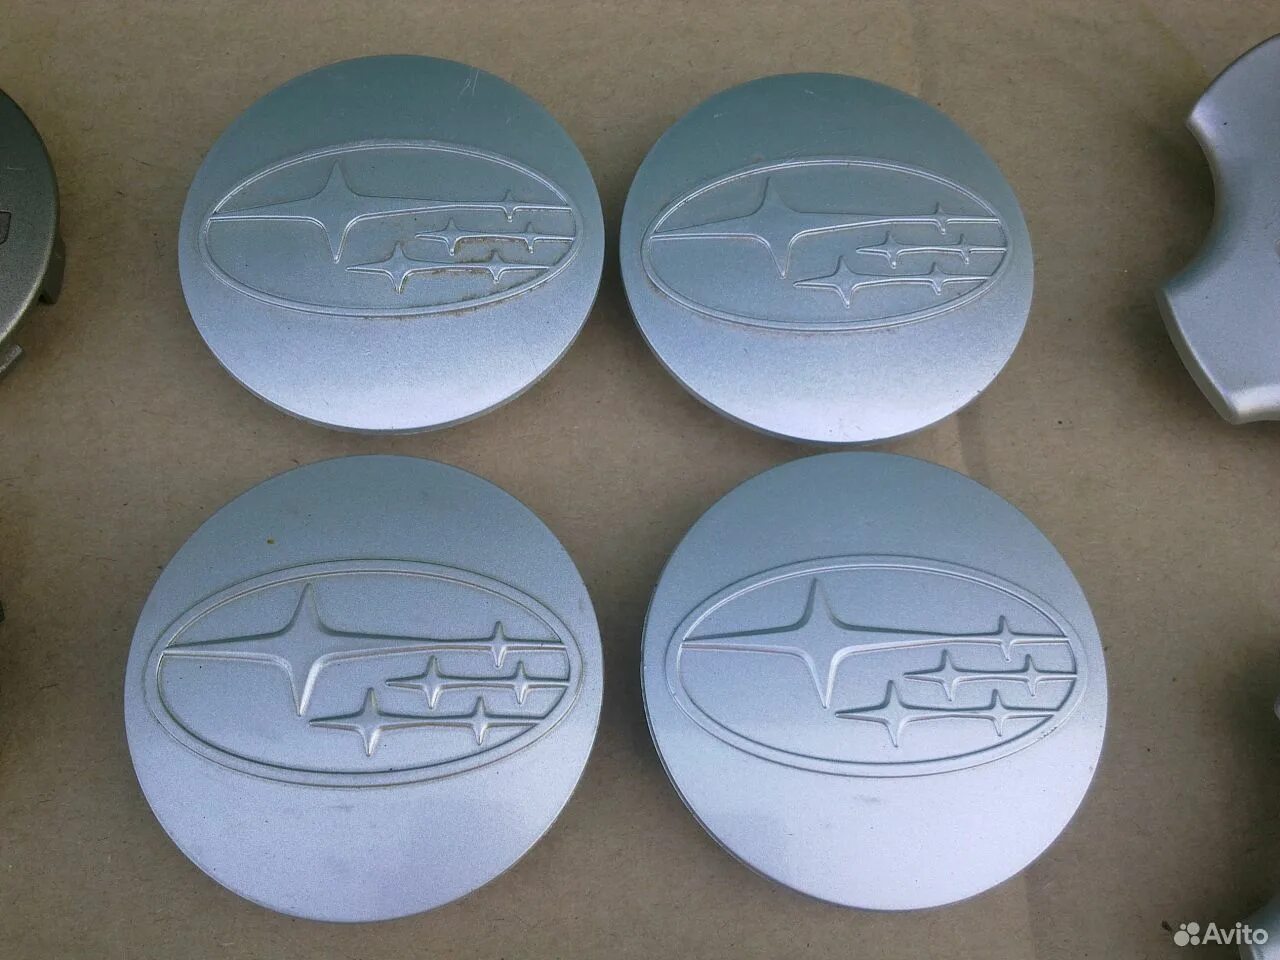 Авито колпачки. Колпачок диска Subaru (43/38-39/10) 5559 Silver. Колпачок диска Subaru Impreza GD. 28111fe460 заглушка диска Субару. Заглушка колеса Subaru Legacy.